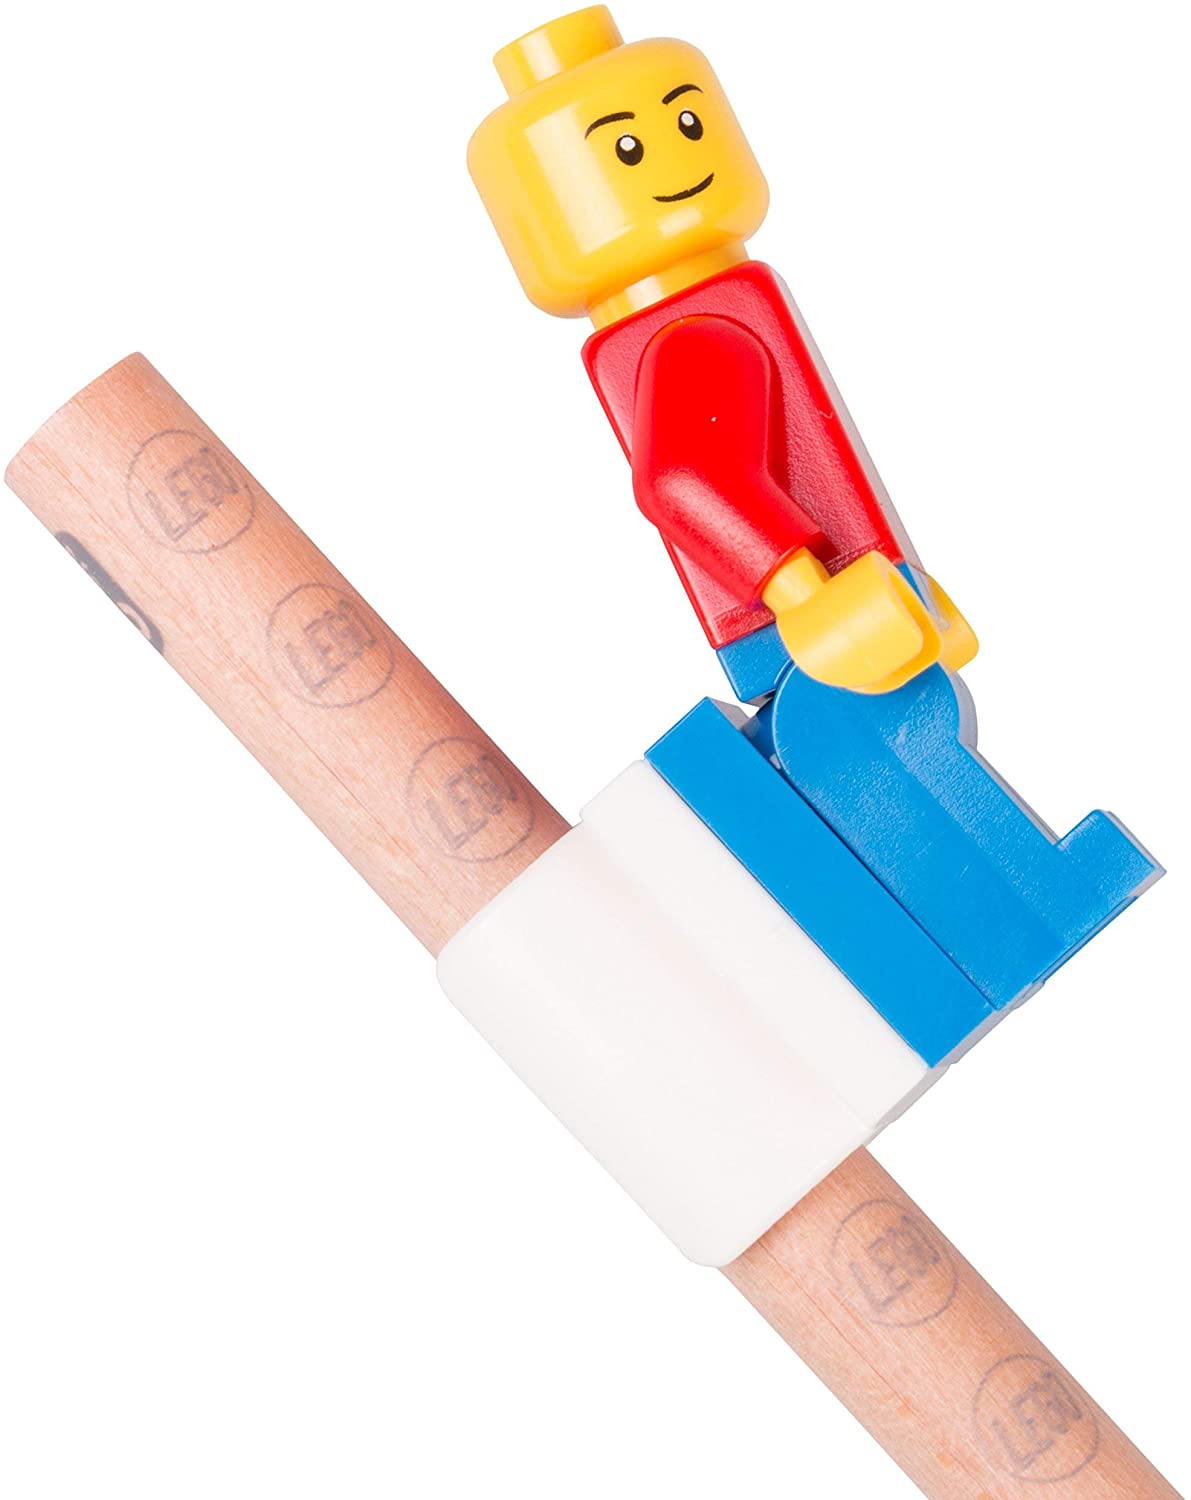 IQ LEGO® 2.0 Stationery set with minifigure, Pencil, Sharpener, Pencil topper & Eraser (52053)